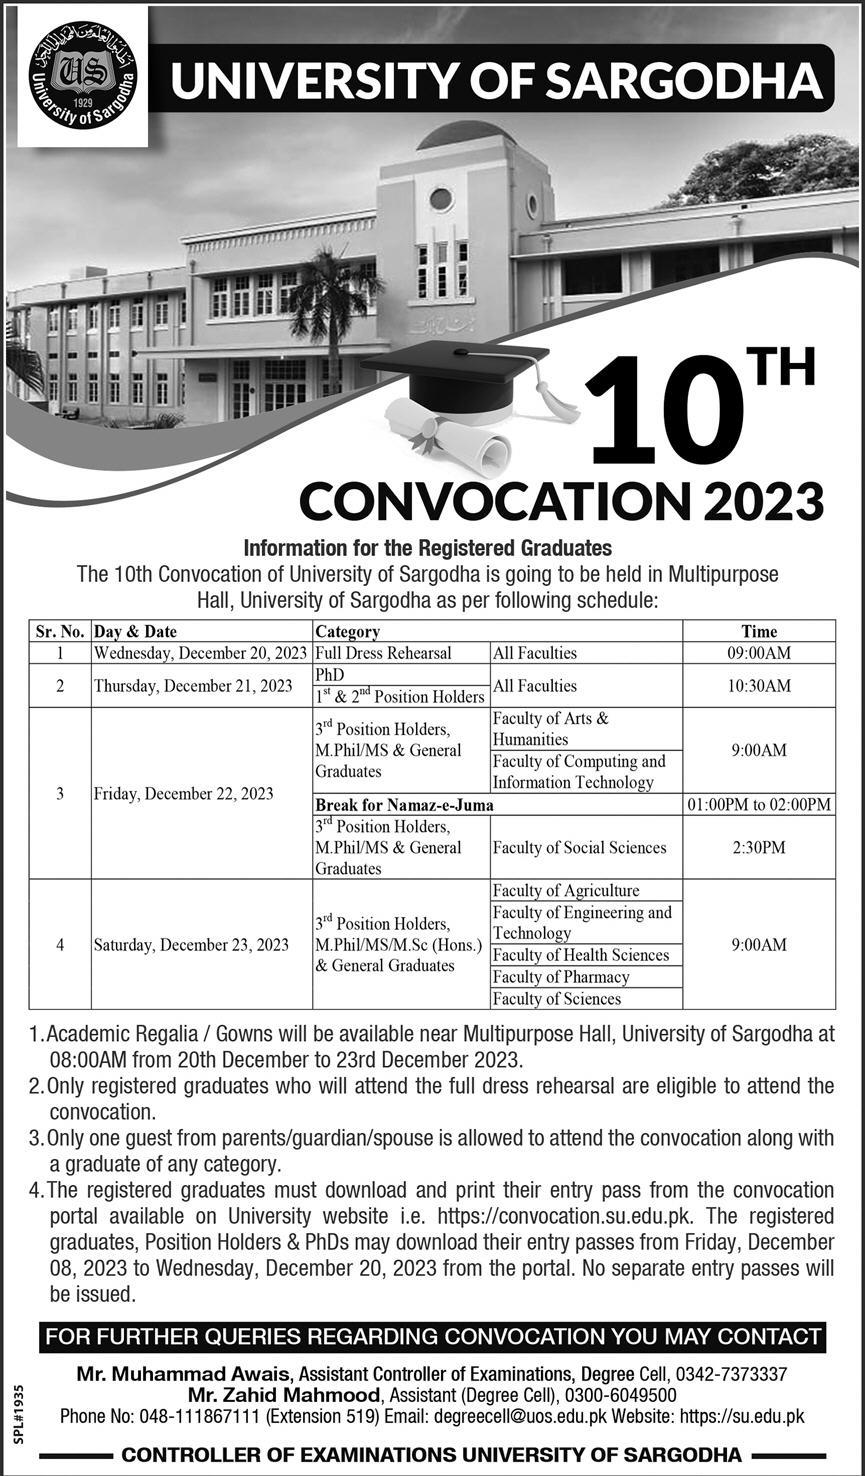 University of Sargodha 10th Convocation 2023 Information For Registered Graduates